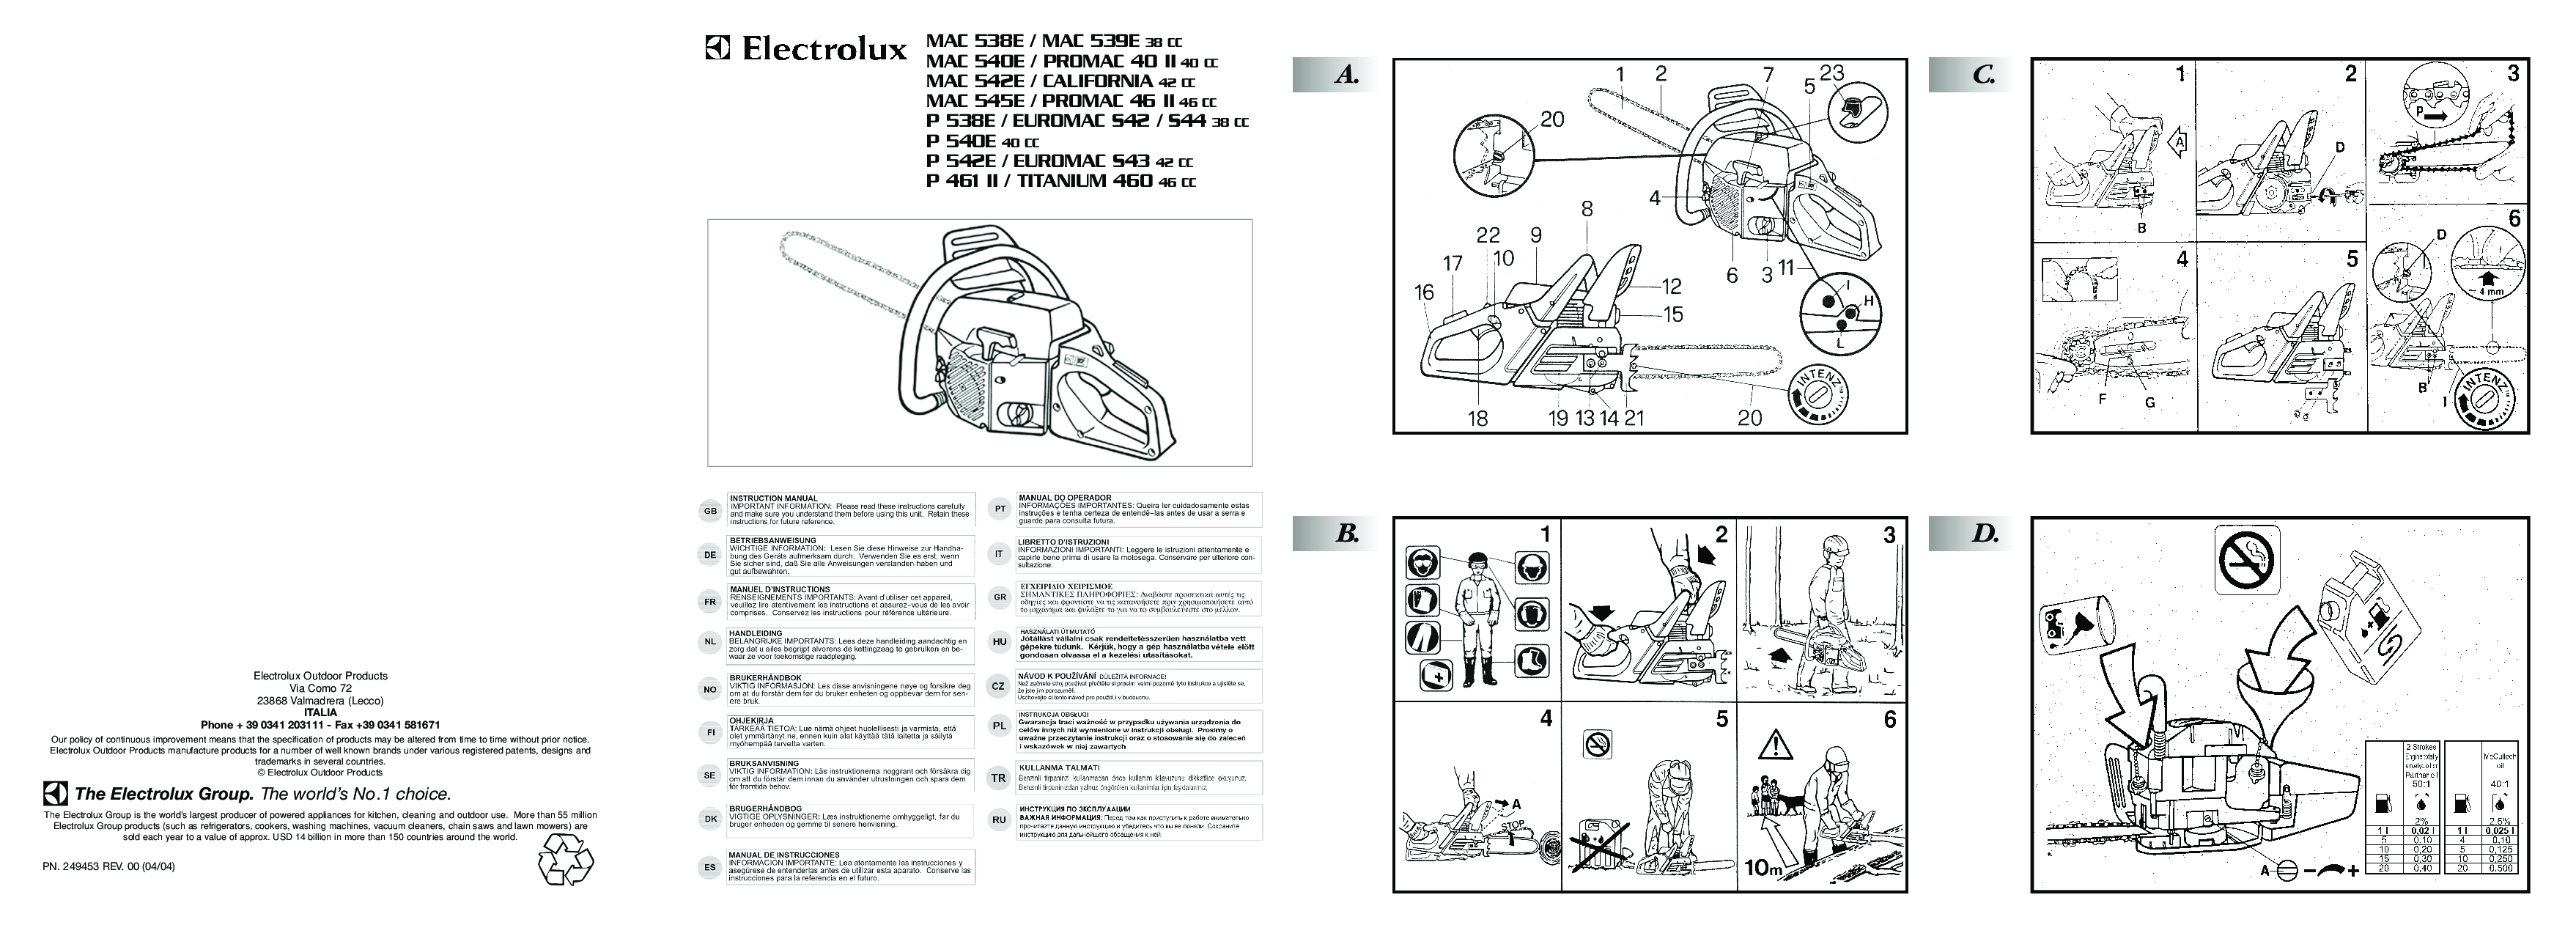 Electrolux 540E, P 542E, P 461 II, MAC 538E, S43 User Manual